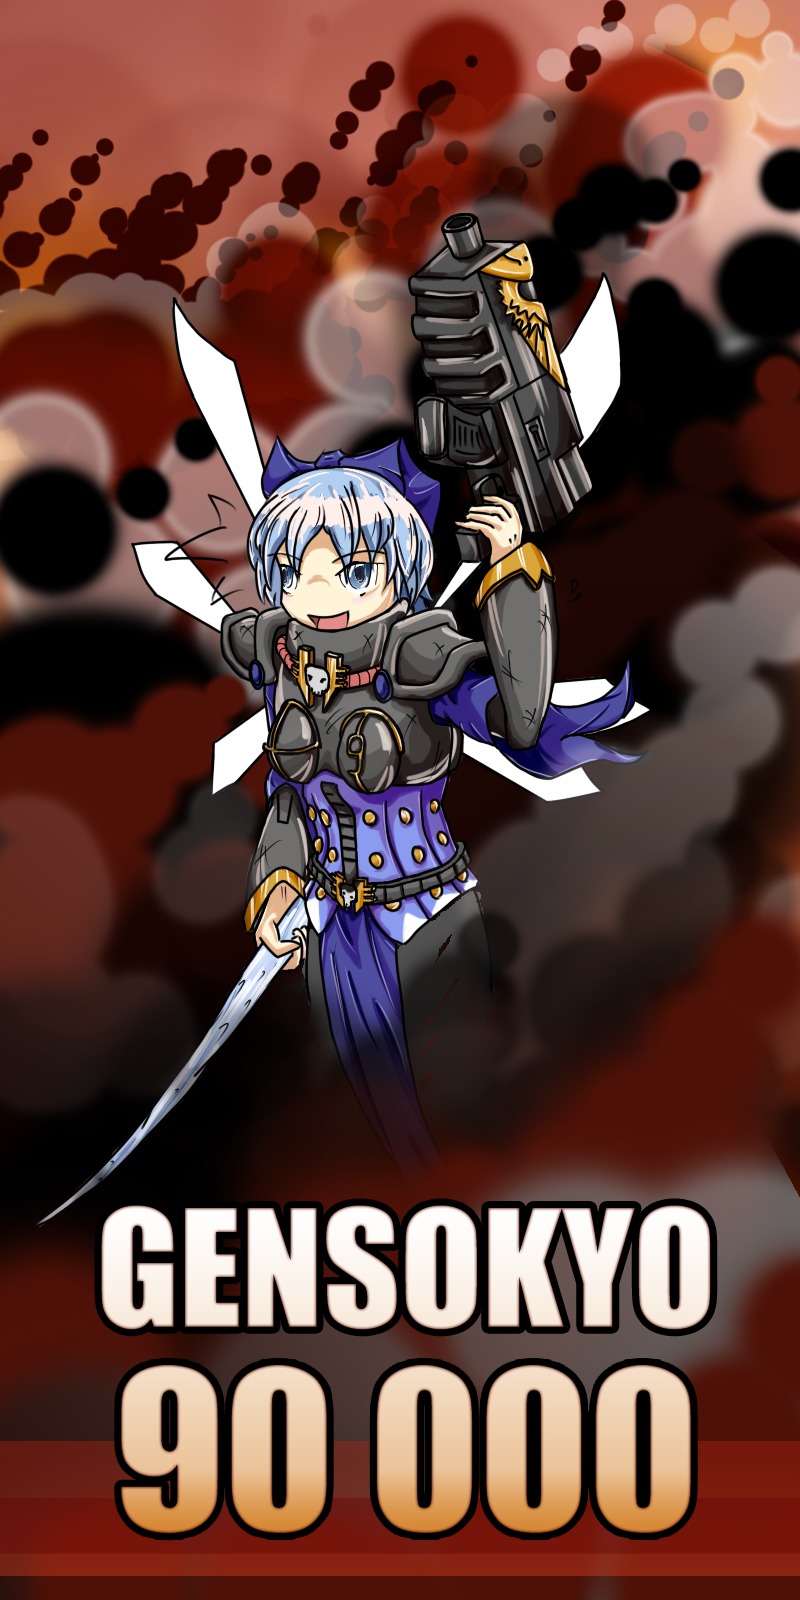 armor blue_hair bolter bow cirno crossover gun power_armor sci-fi short_hair sister_of_battle skull sword touhou warhammer_40k weapon